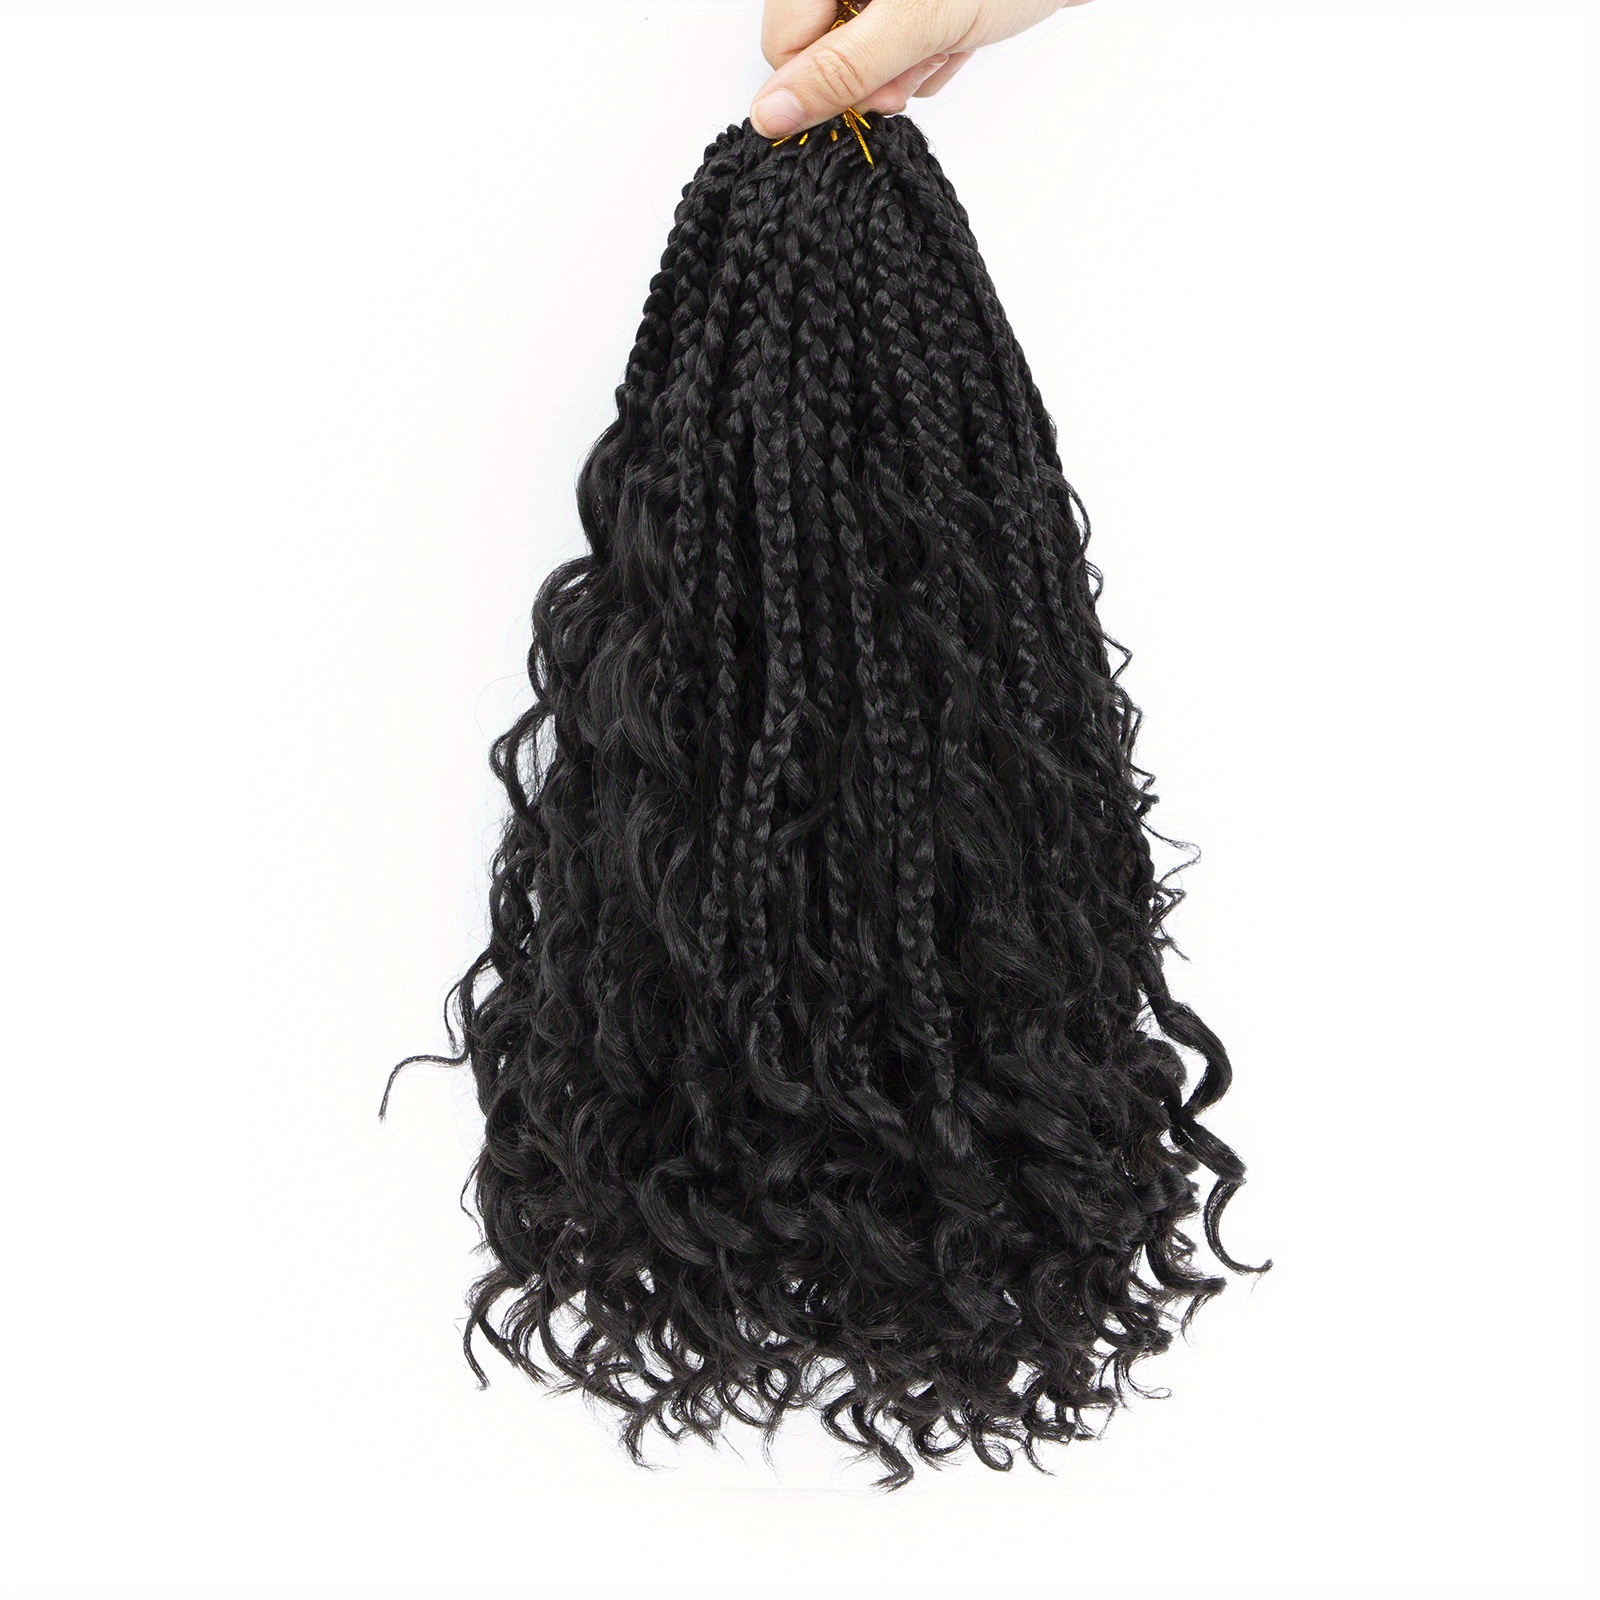  Goddess Box Braids Crochet Hair for Woman 12 Inch 7 Packs  Short Pre-looped Crochet Box Braids Curly Ends Bohemian Hippie Braids  Synthetic Braiding Hair Extension (1B) : Beauty & Personal Care